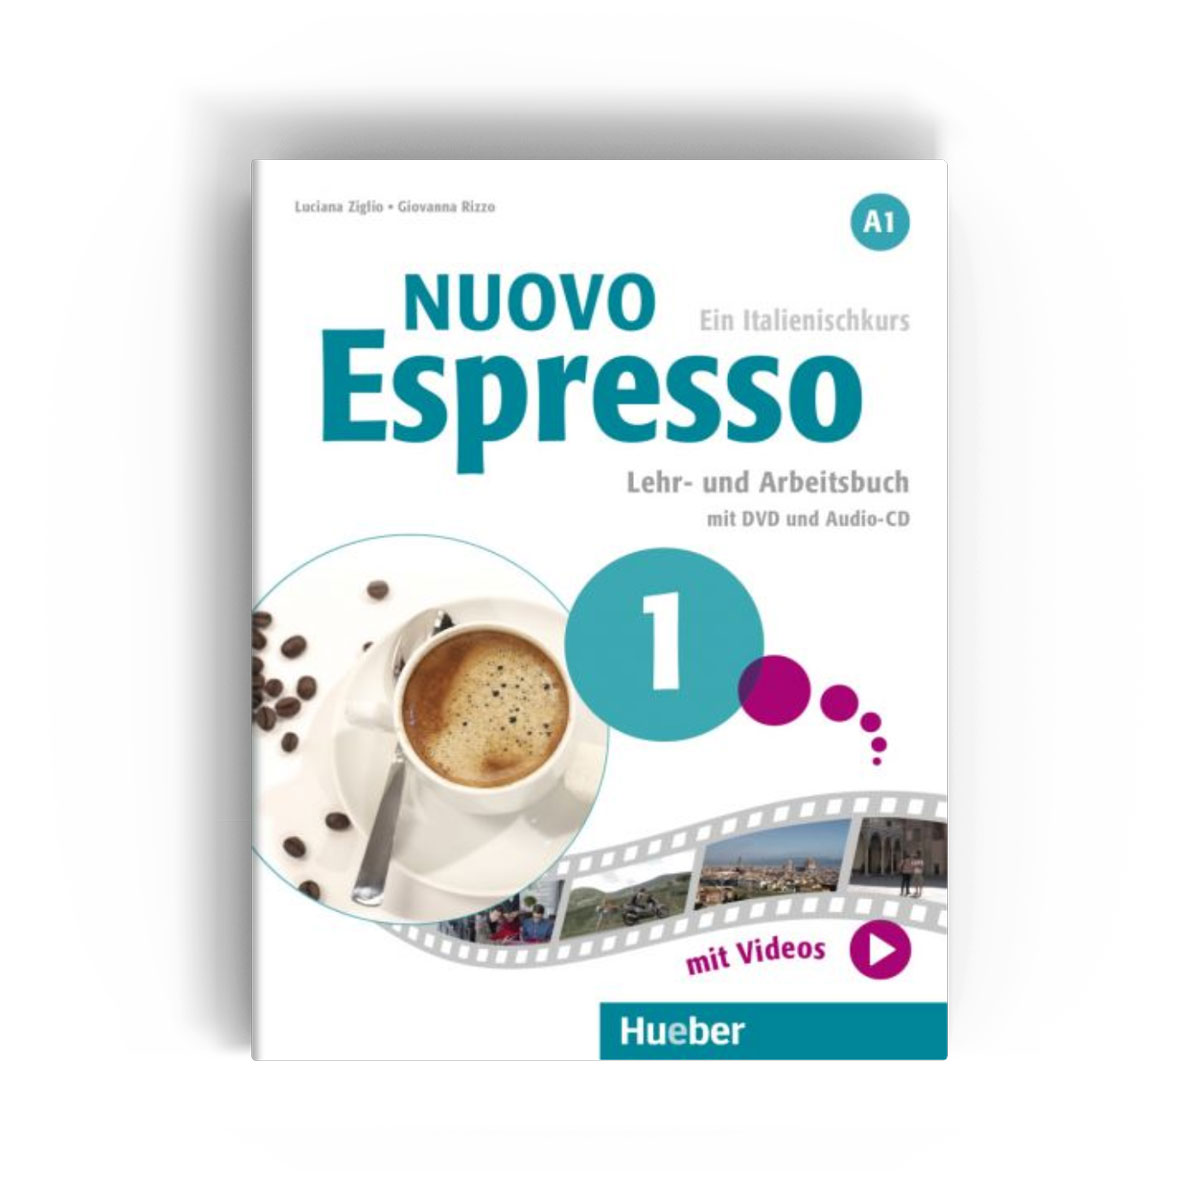 Nuovo espresso hueber | Textbooks for teaching Italian: a comparison